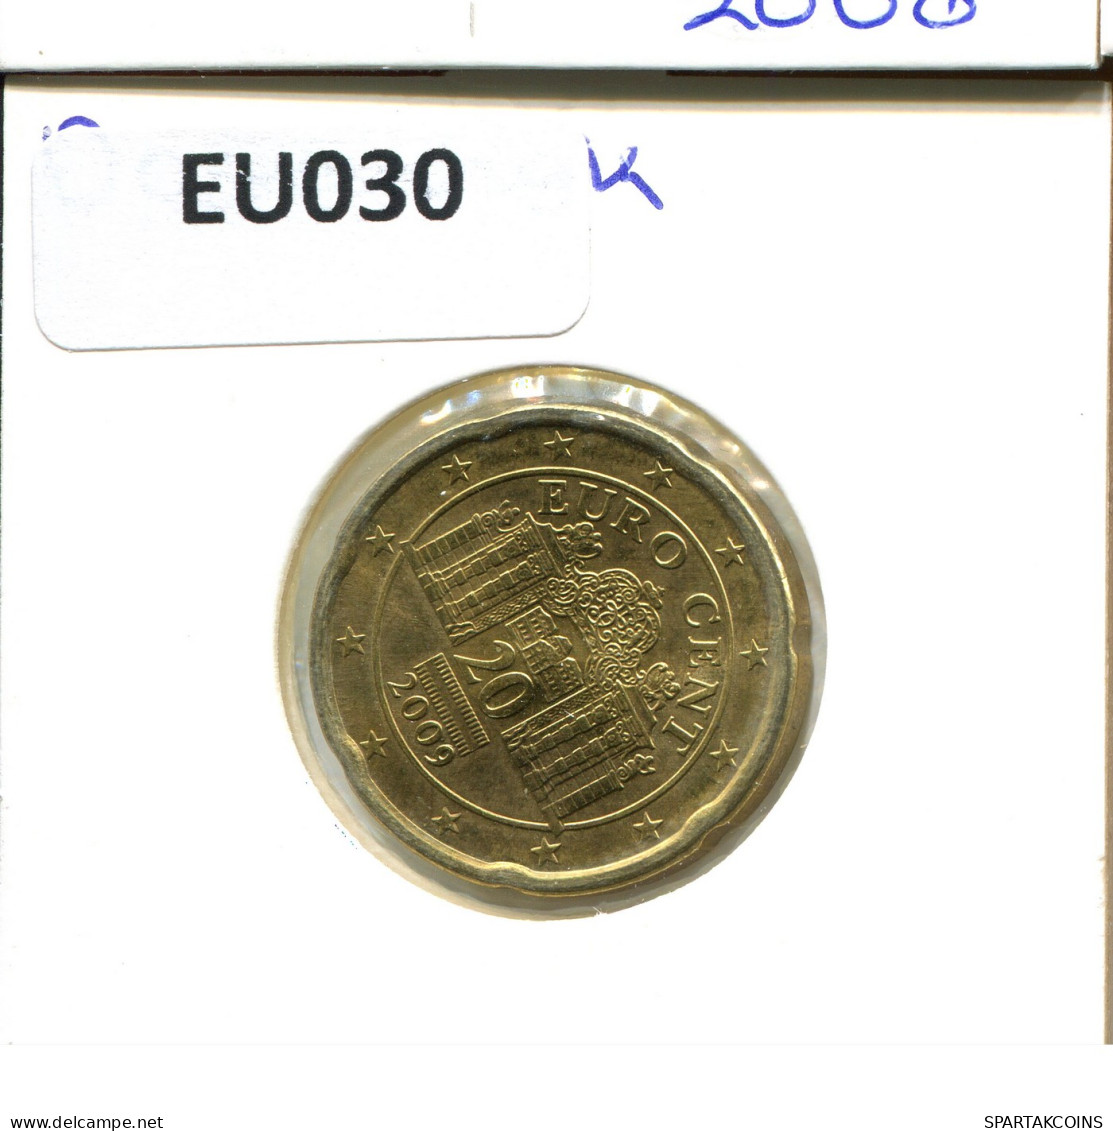 20 EURO CENTS 2009 AUSTRIA Coin #EU030.U - Autriche